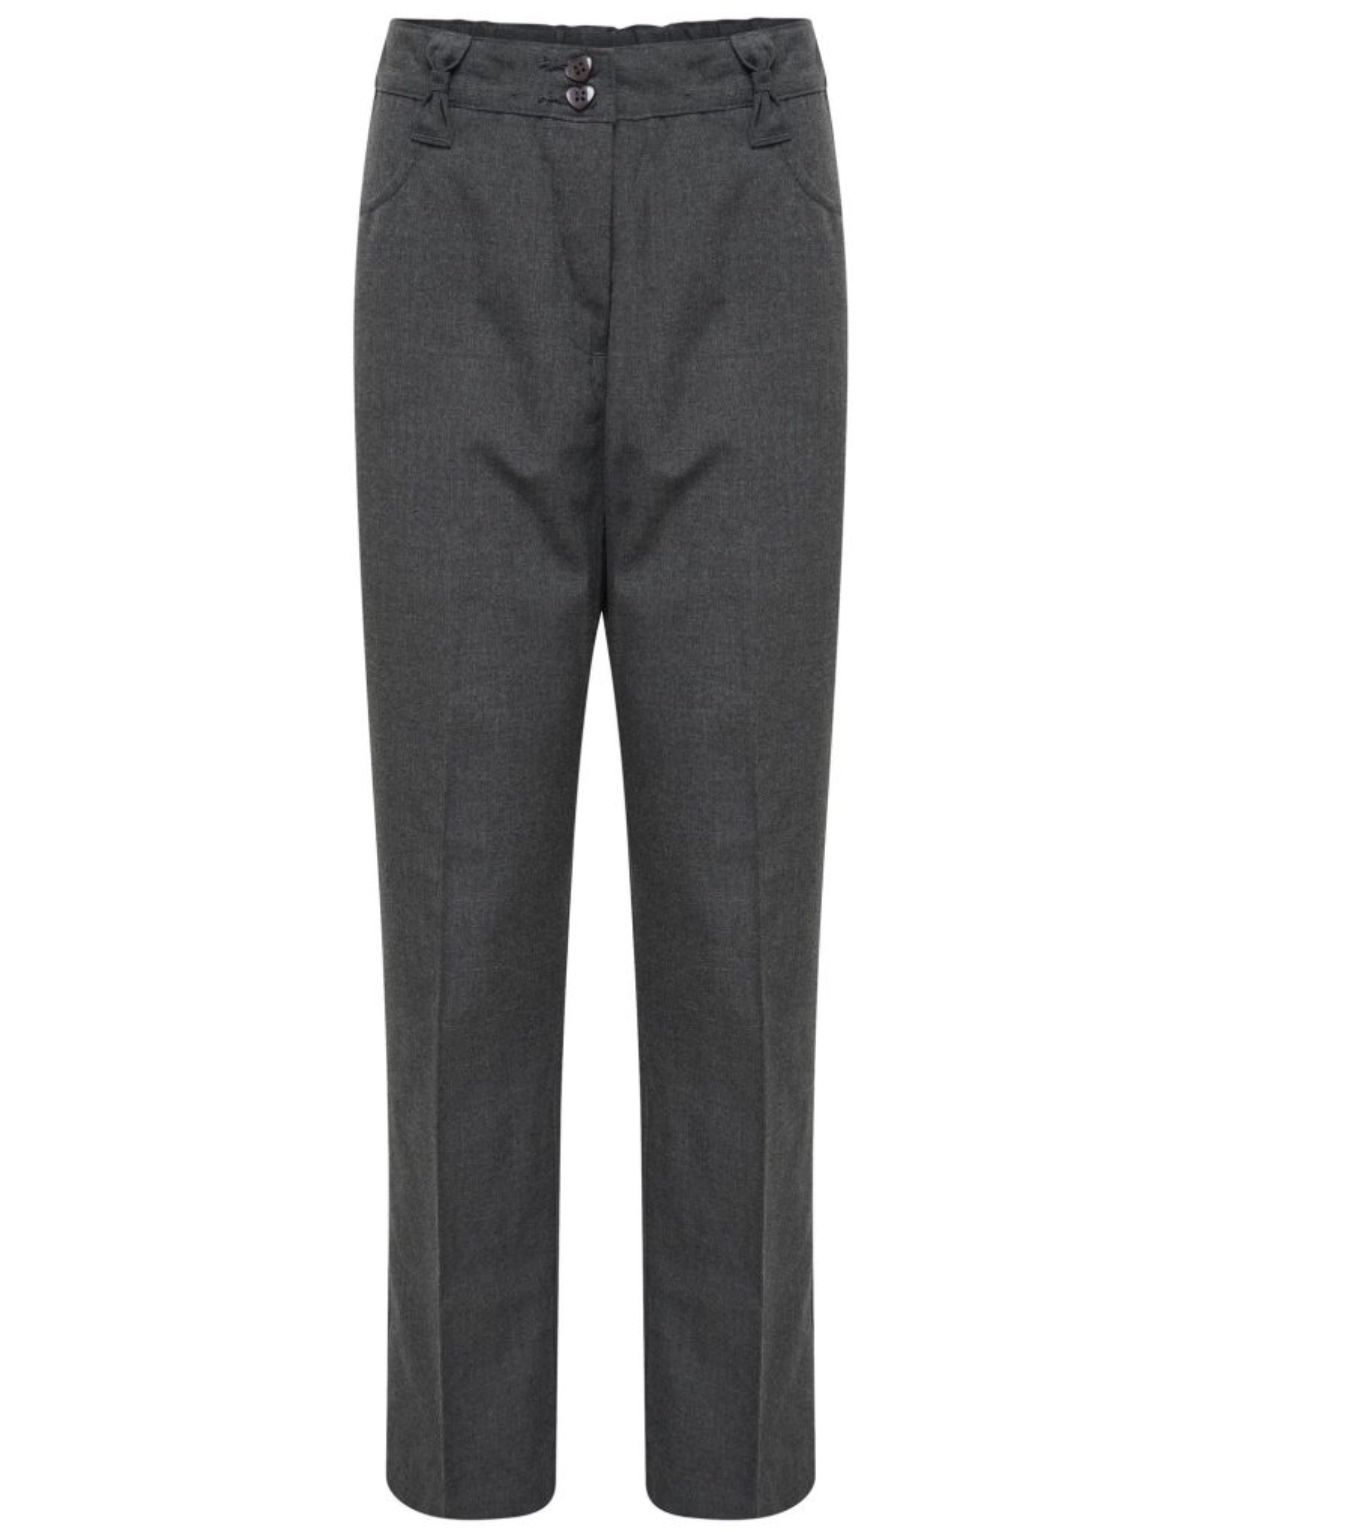 Girls' Grey School Trousers, Adjustable Waist, Zip Fly, Side Pockets, Plain Front 9-10 Y